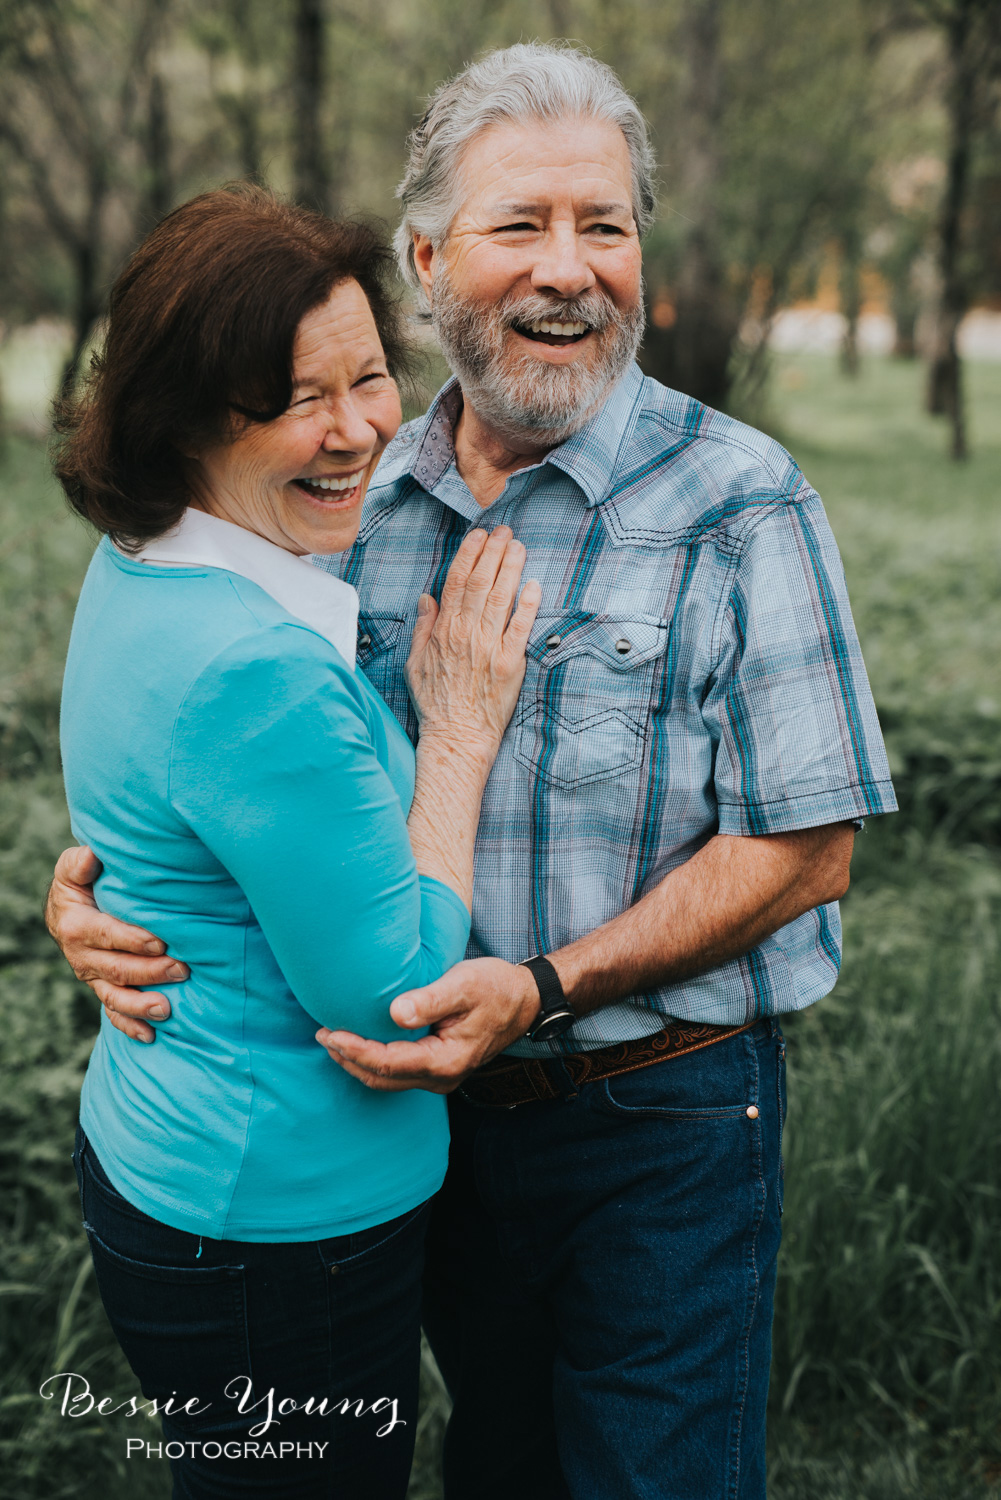 Premium Photo | Happy old couple posing at autumn park